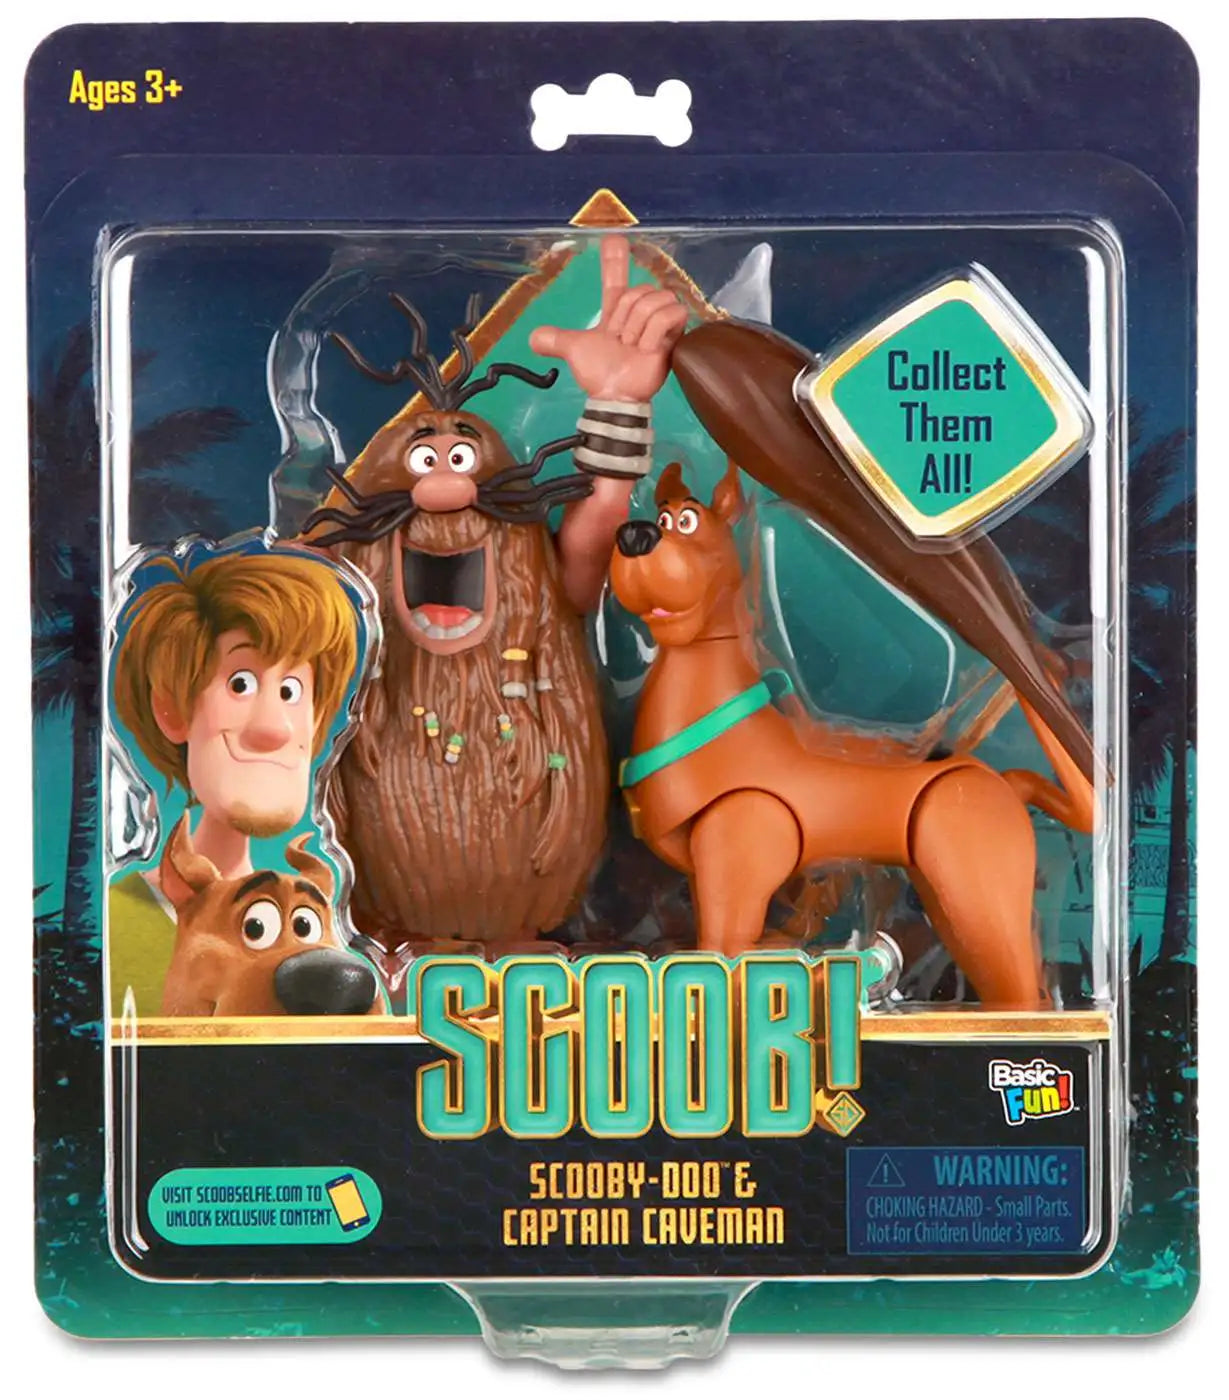 Basic Fun - Scoob! - Scooby-Doo & Captain Caveman (2 pack)